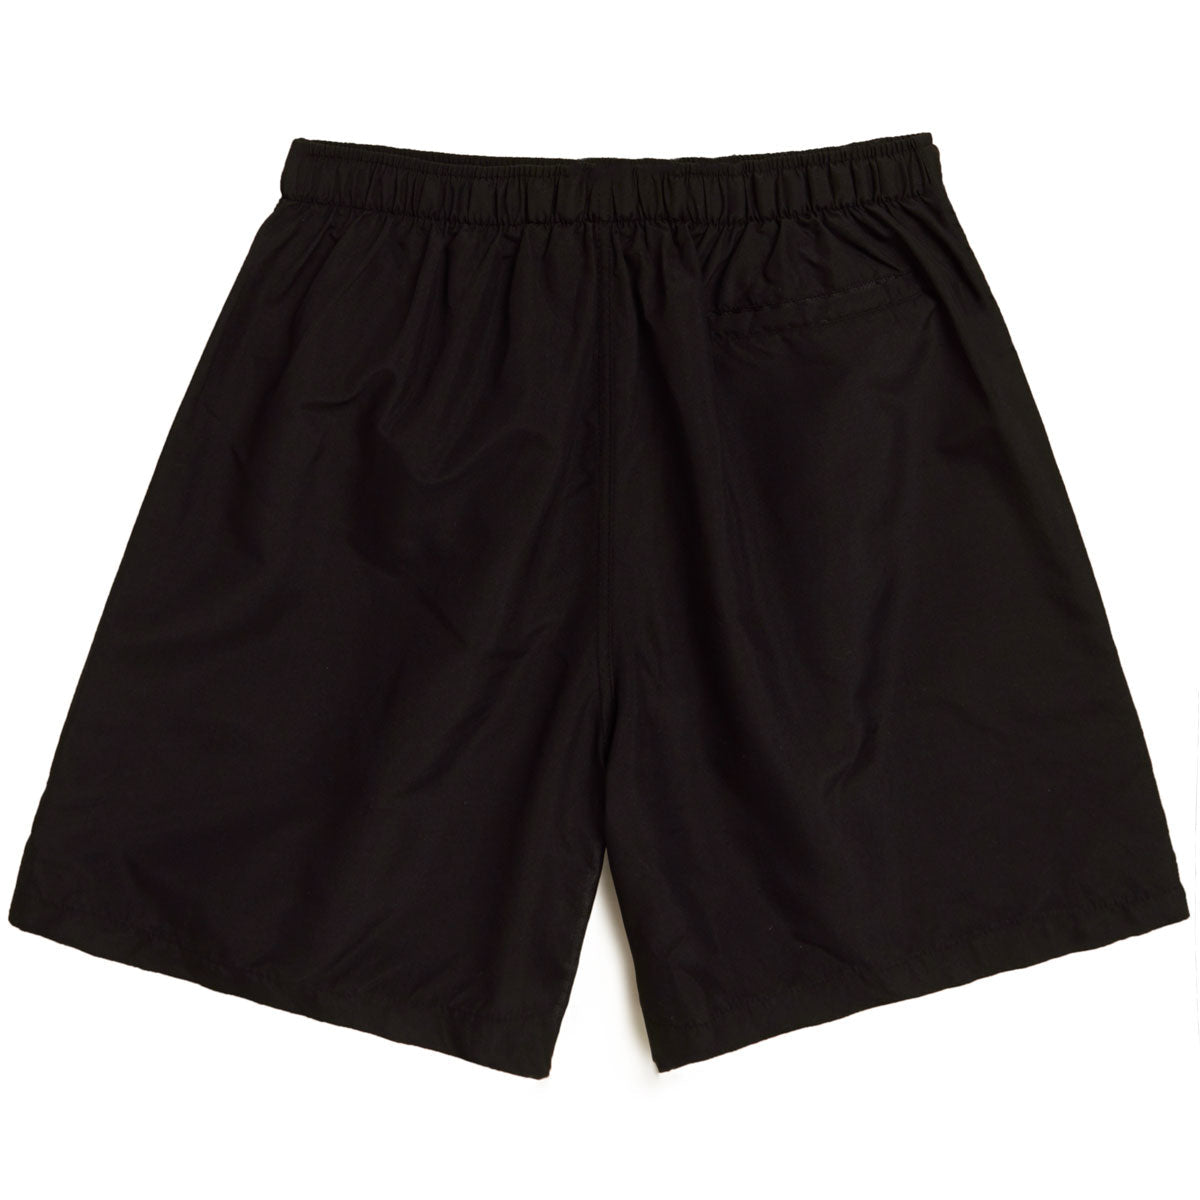 CCS Swim Club Hybrid Shorts - Black image 4